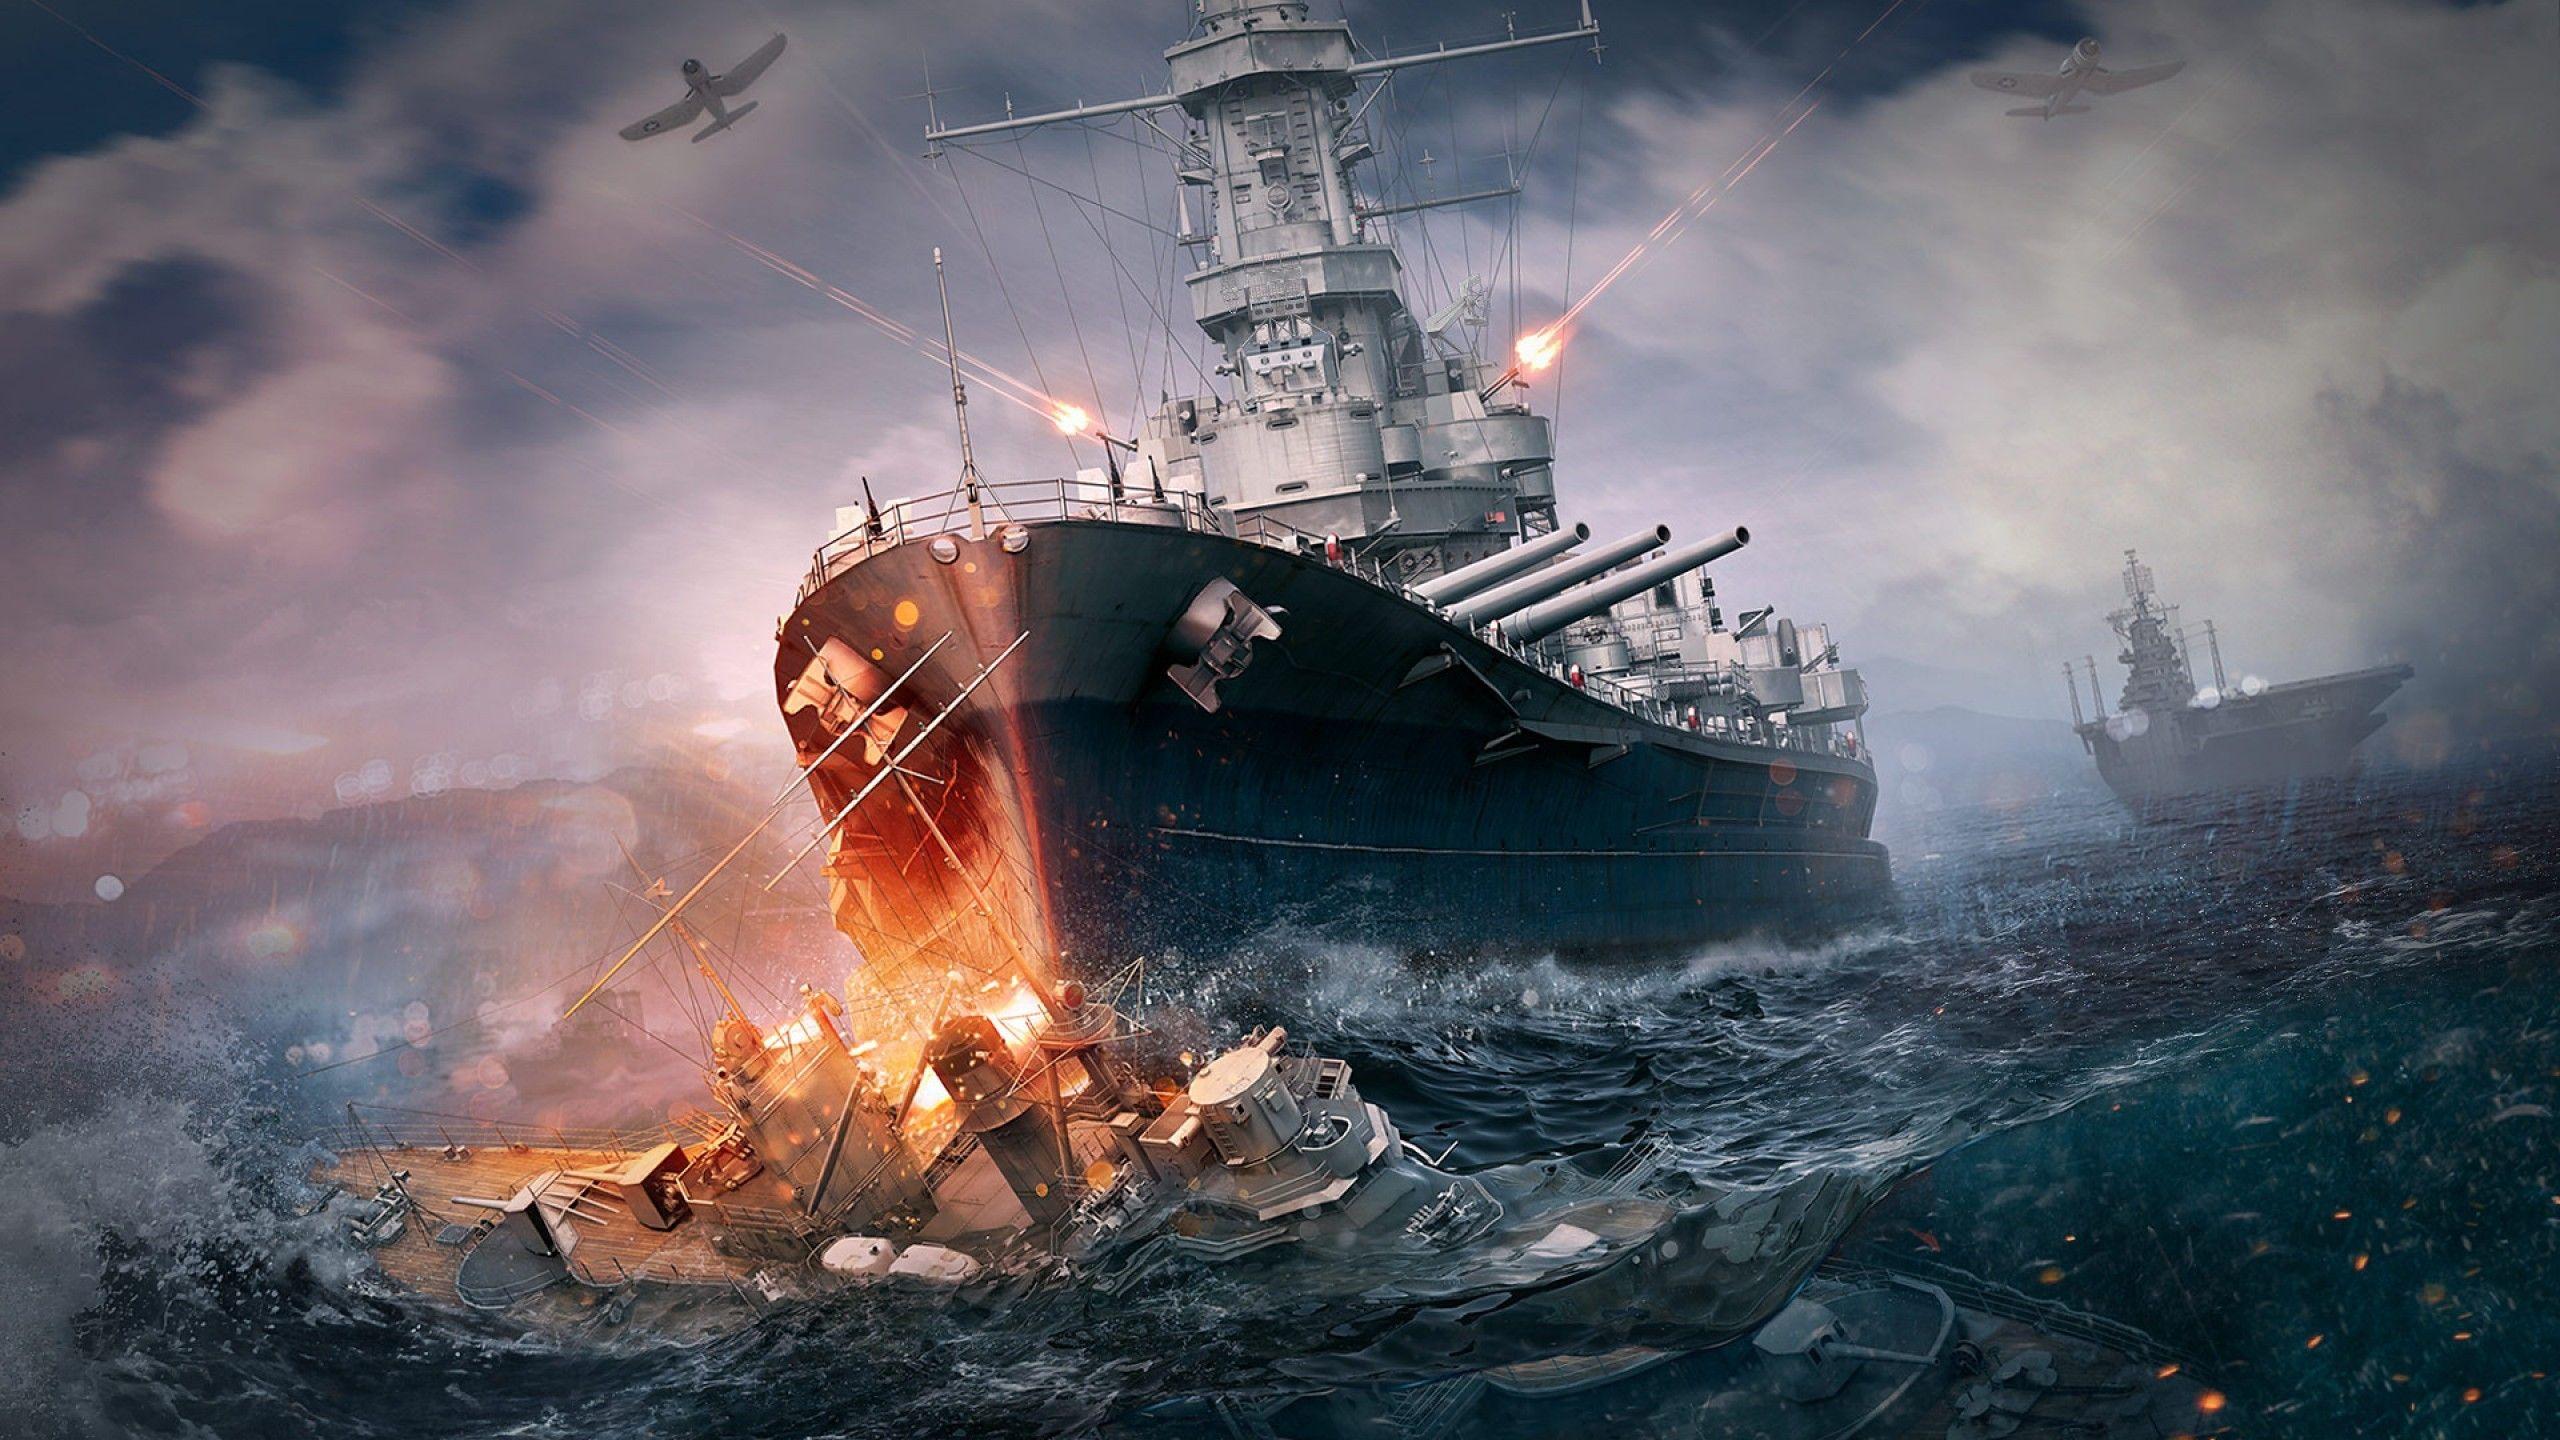 Video Game World Of Warships Wallpaper. World of warships